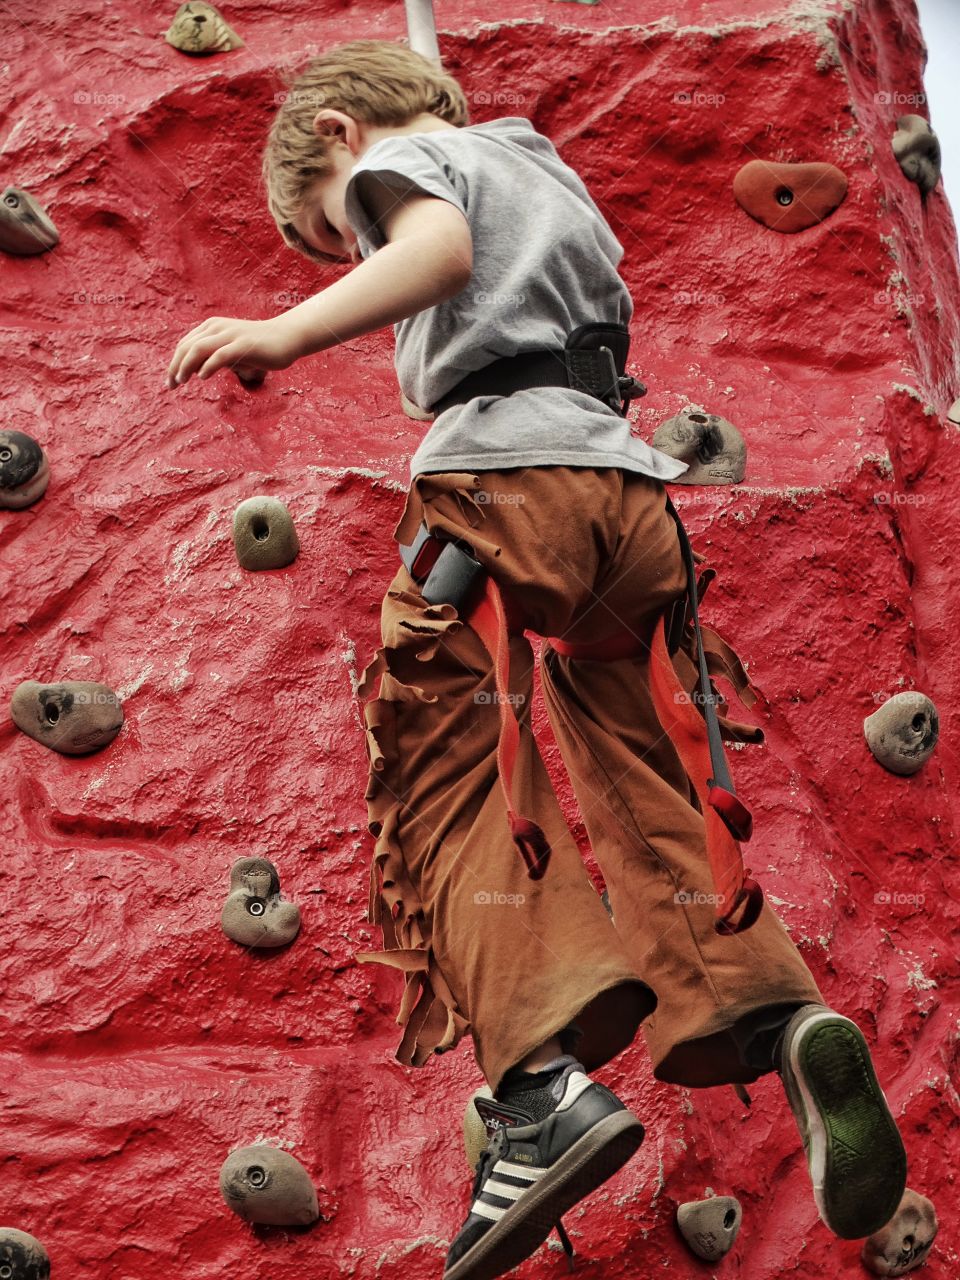 Boy Climbing A Rock Wall
